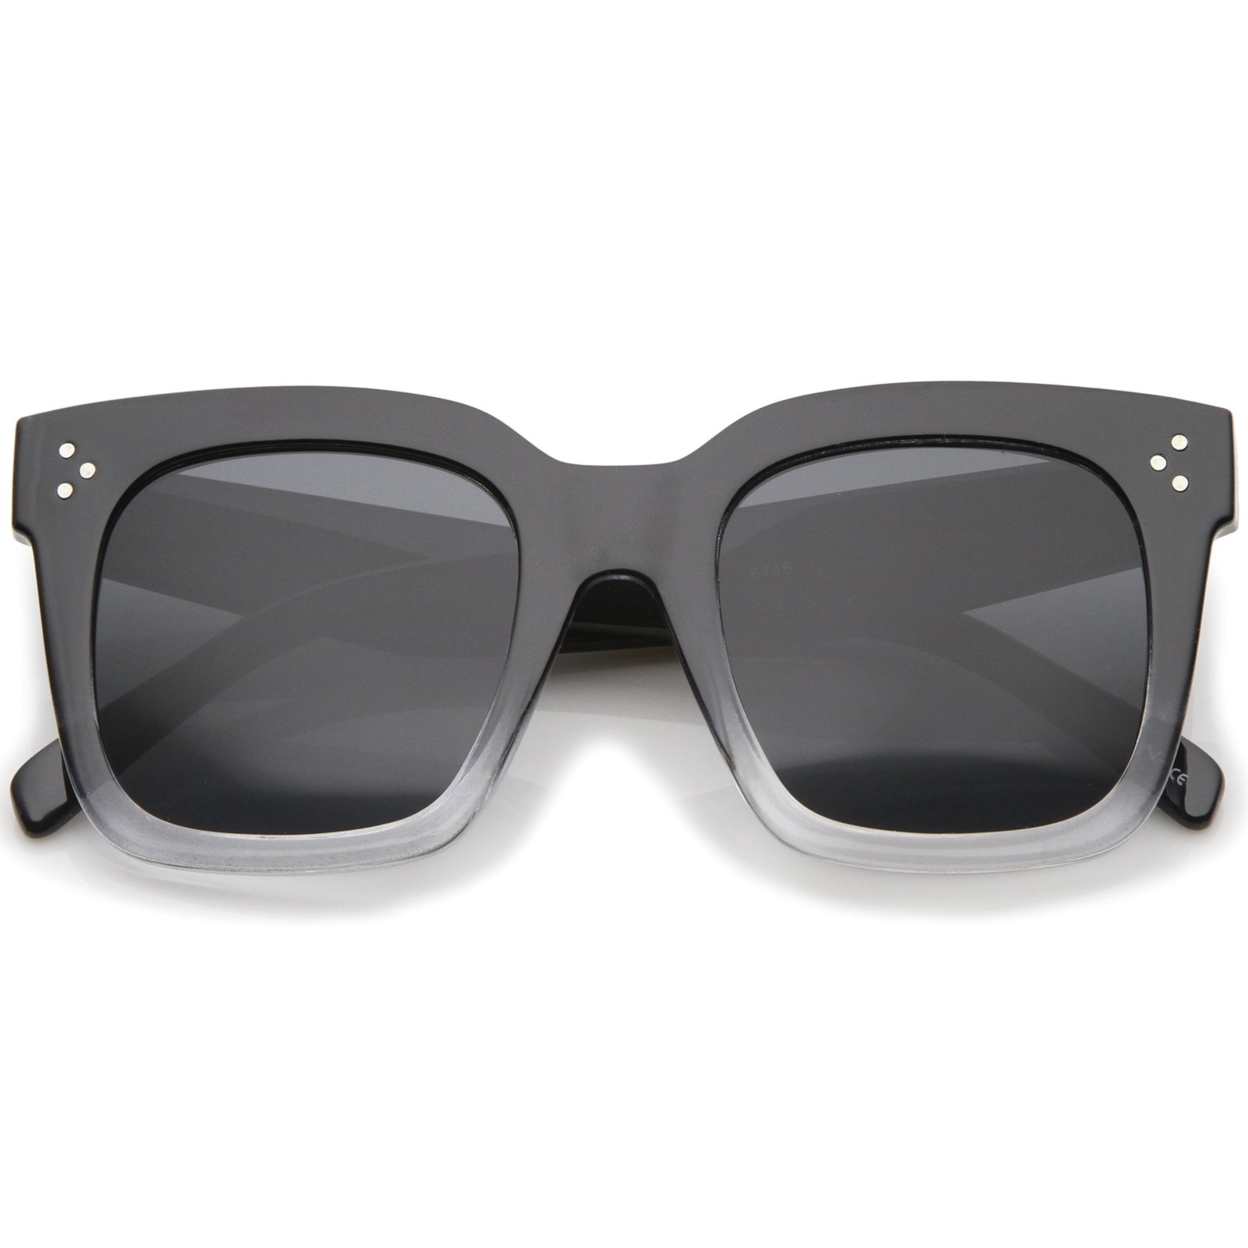 Modern Two-Toned Bold Frame Square Horn Rimmed Sunglasses 50mm - Tortoise-Blue Fade / Lavender